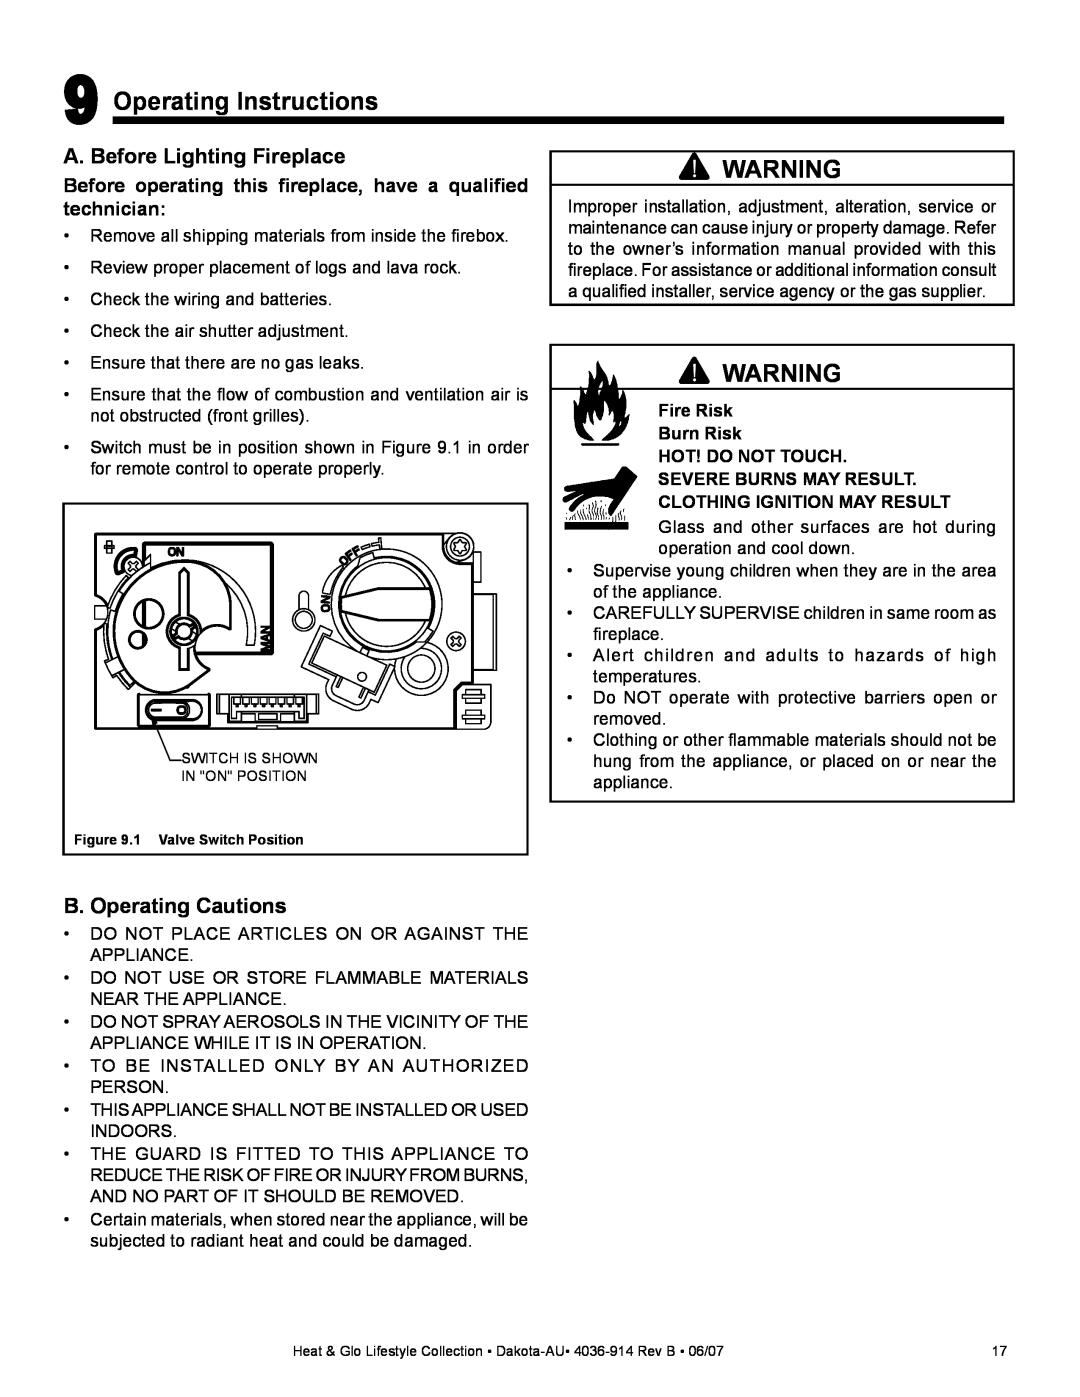 Heat & Glo LifeStyle DAKOTA-AU manual Operating Instructions, A. Before Lighting Fireplace, B. Operating Cautions 